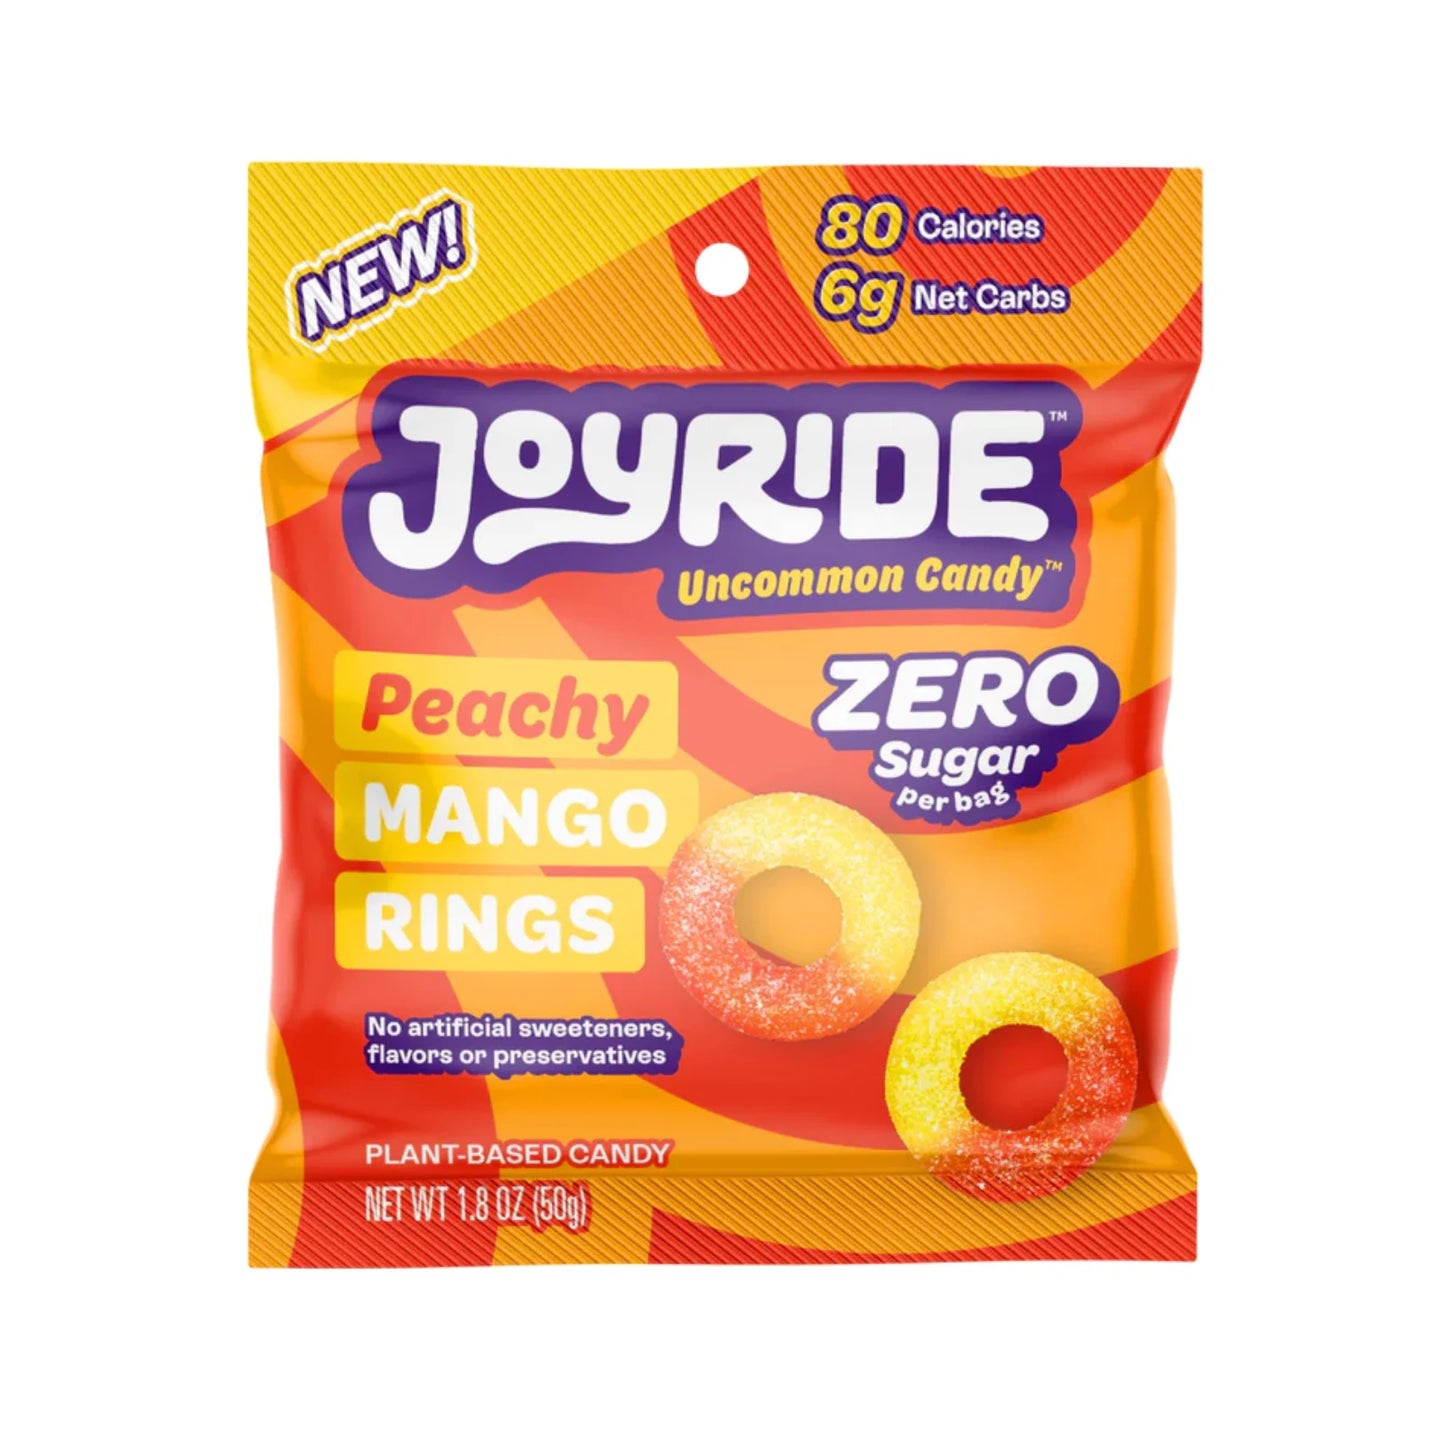 Joyride Peachy Mango Rings